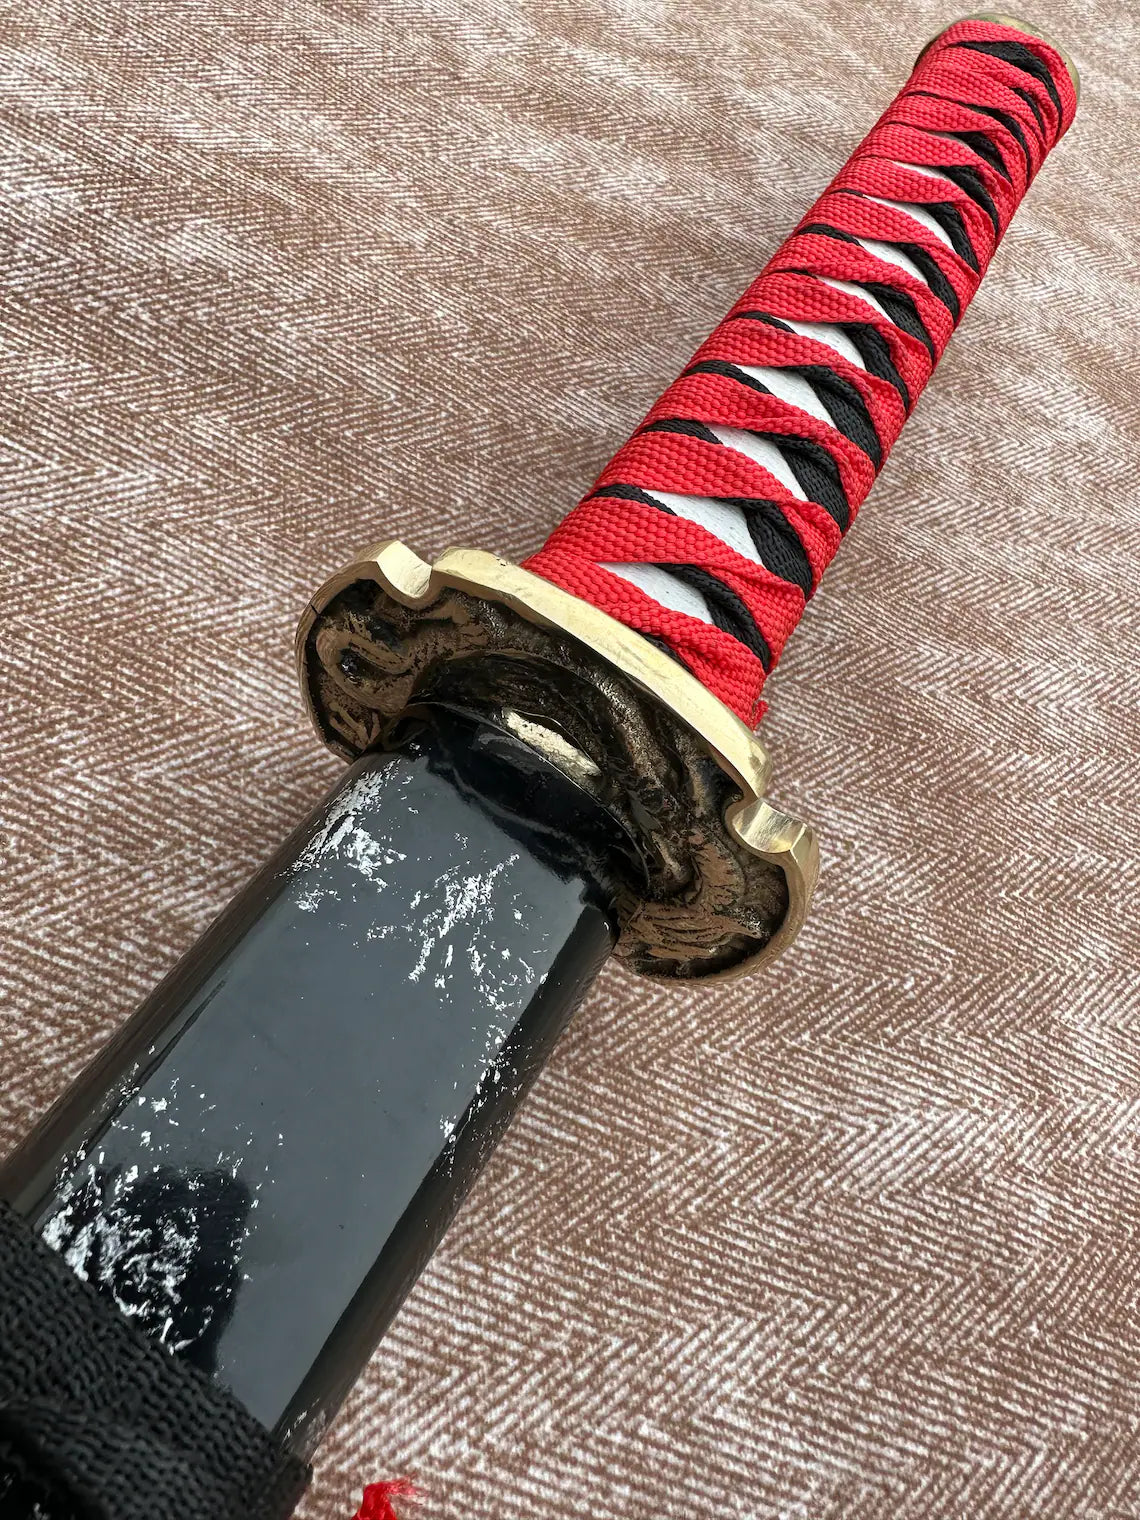 Japanese Katana - 1095 Steel Clay Tempered Blade - Razor Sharp Real Tachi Sword - Tokugawa Ninja - Handmade Full Tang